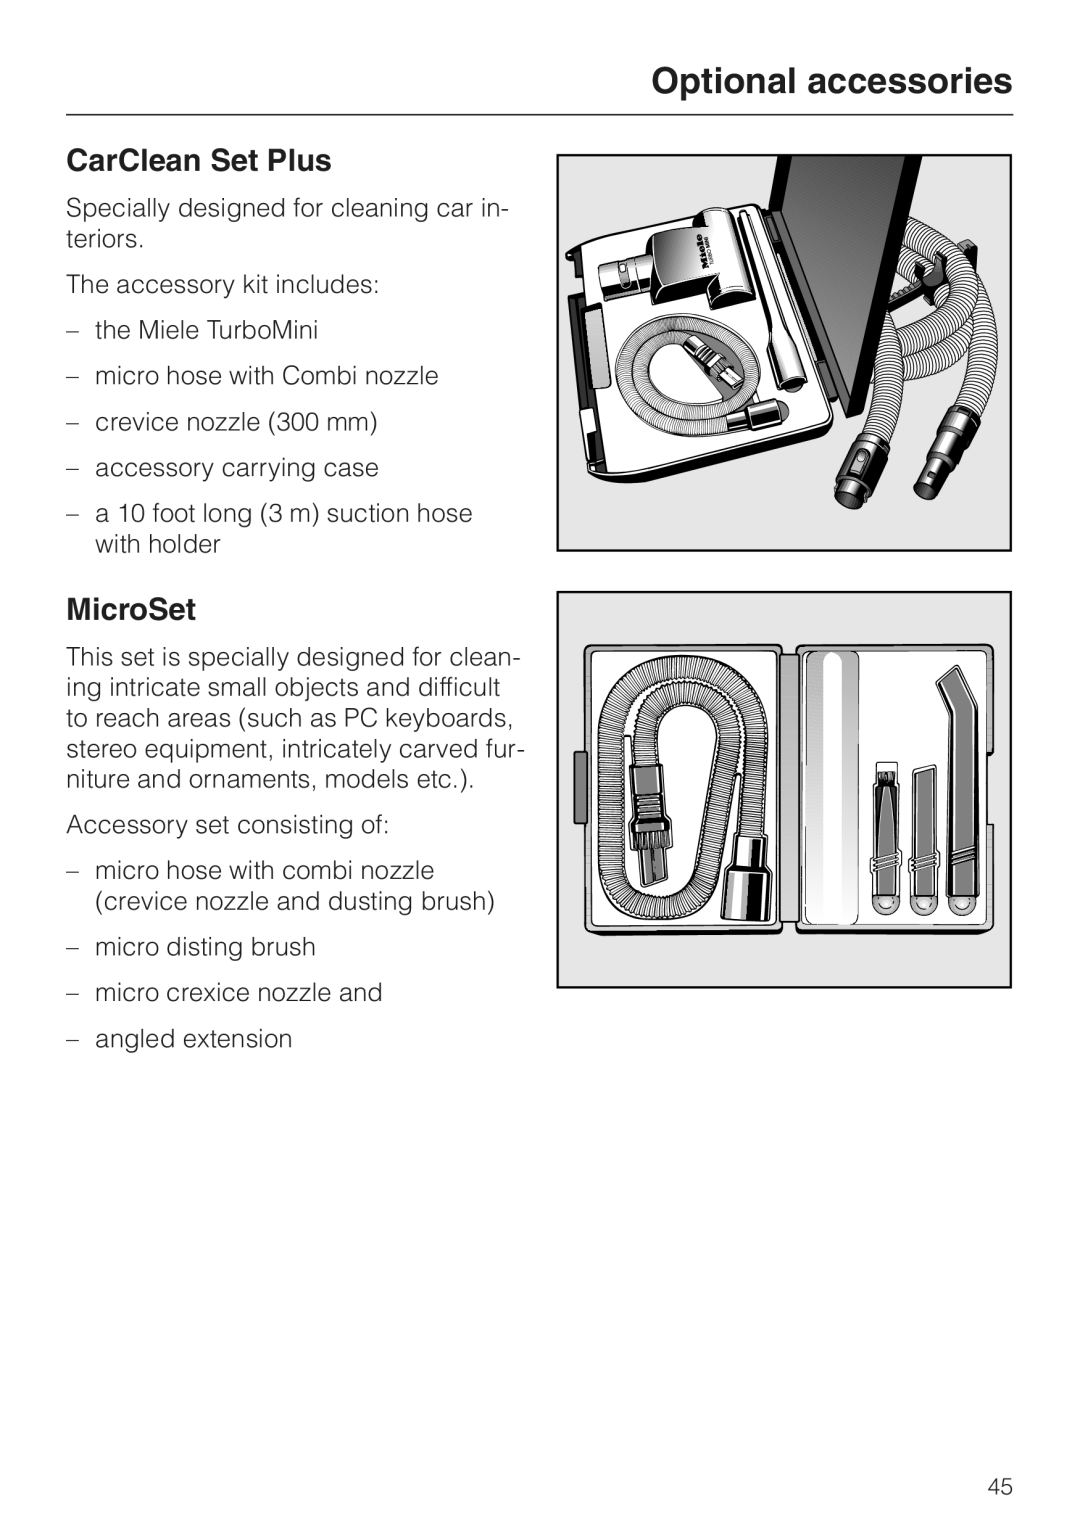 Miele S 600 - S 648, S 500 - S 548 manual CarClean Set Plus, MicroSet, Optional accessories 